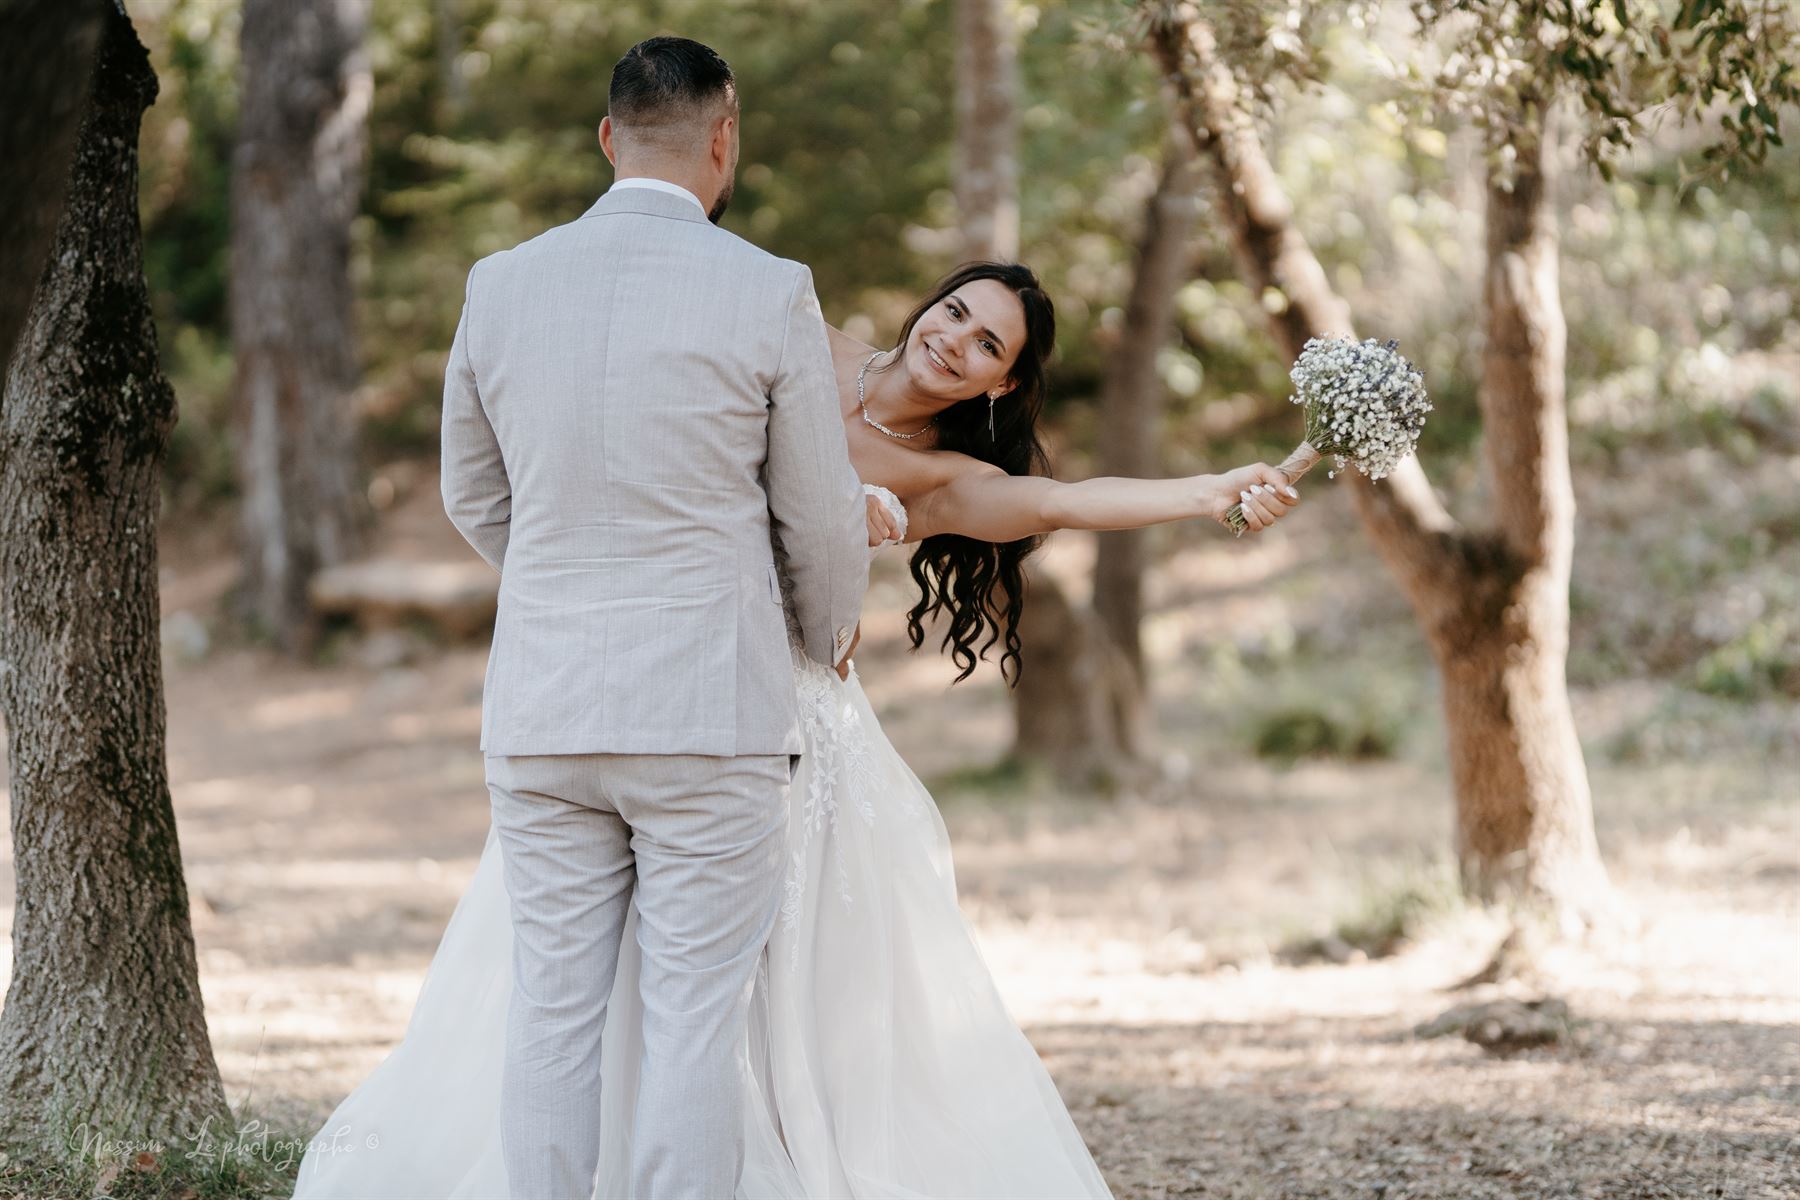 Wedding Photographer Aix en Provence: Capturing Love's Embrace 10